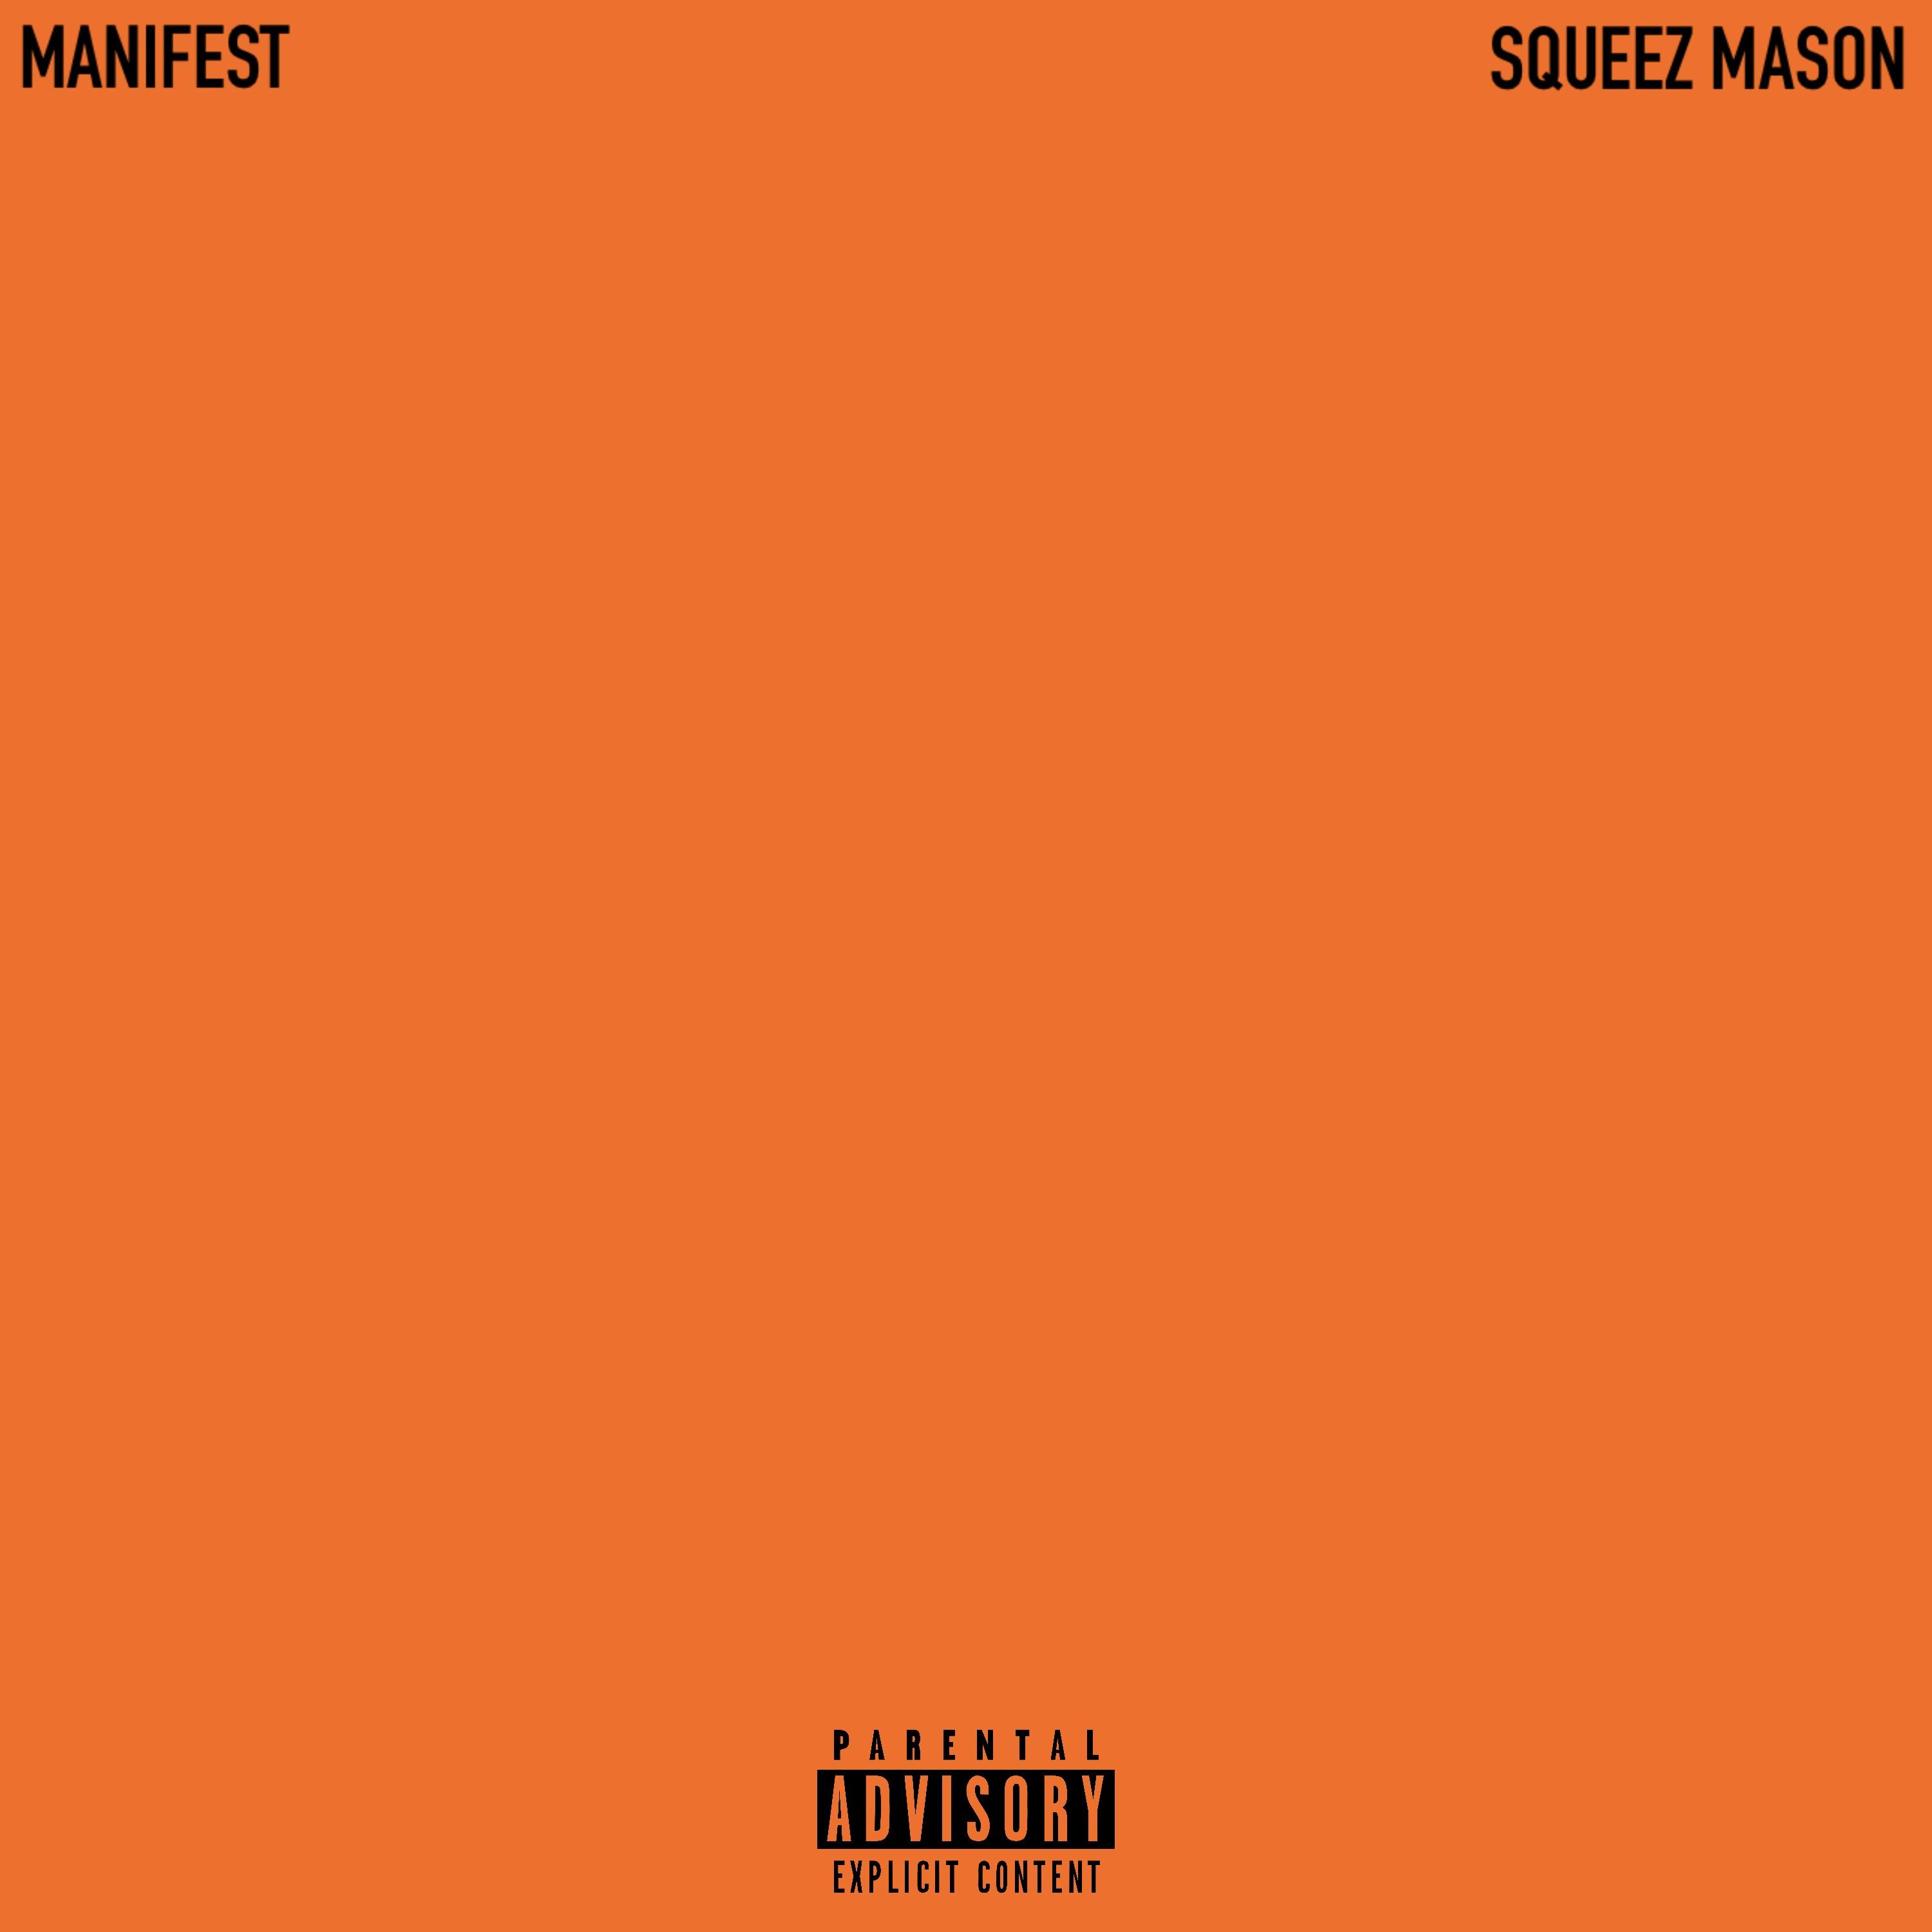 Squeez Mason - Visionary